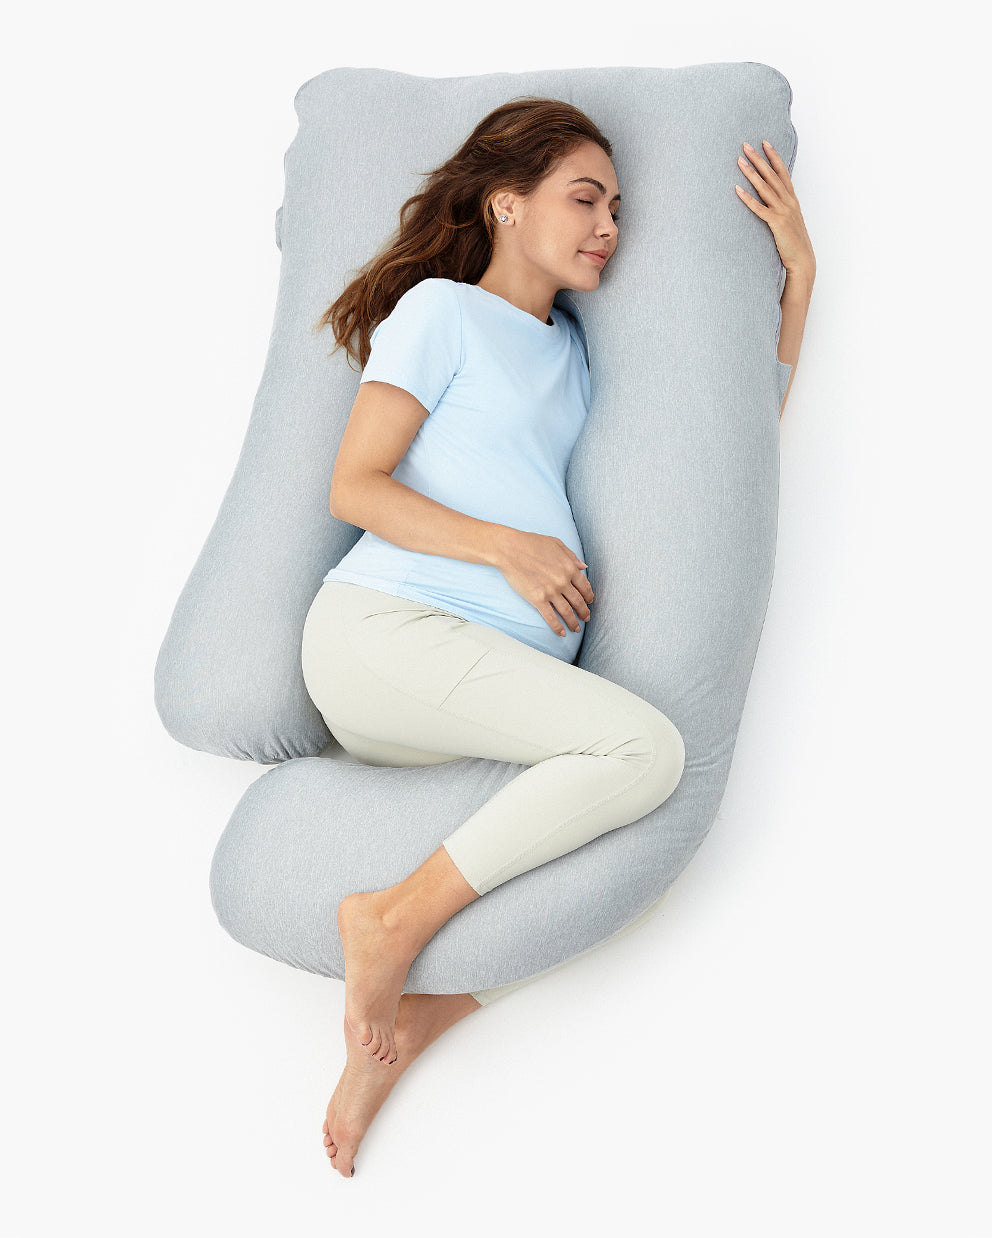 The Super Plush G-Pregnancy Pillow